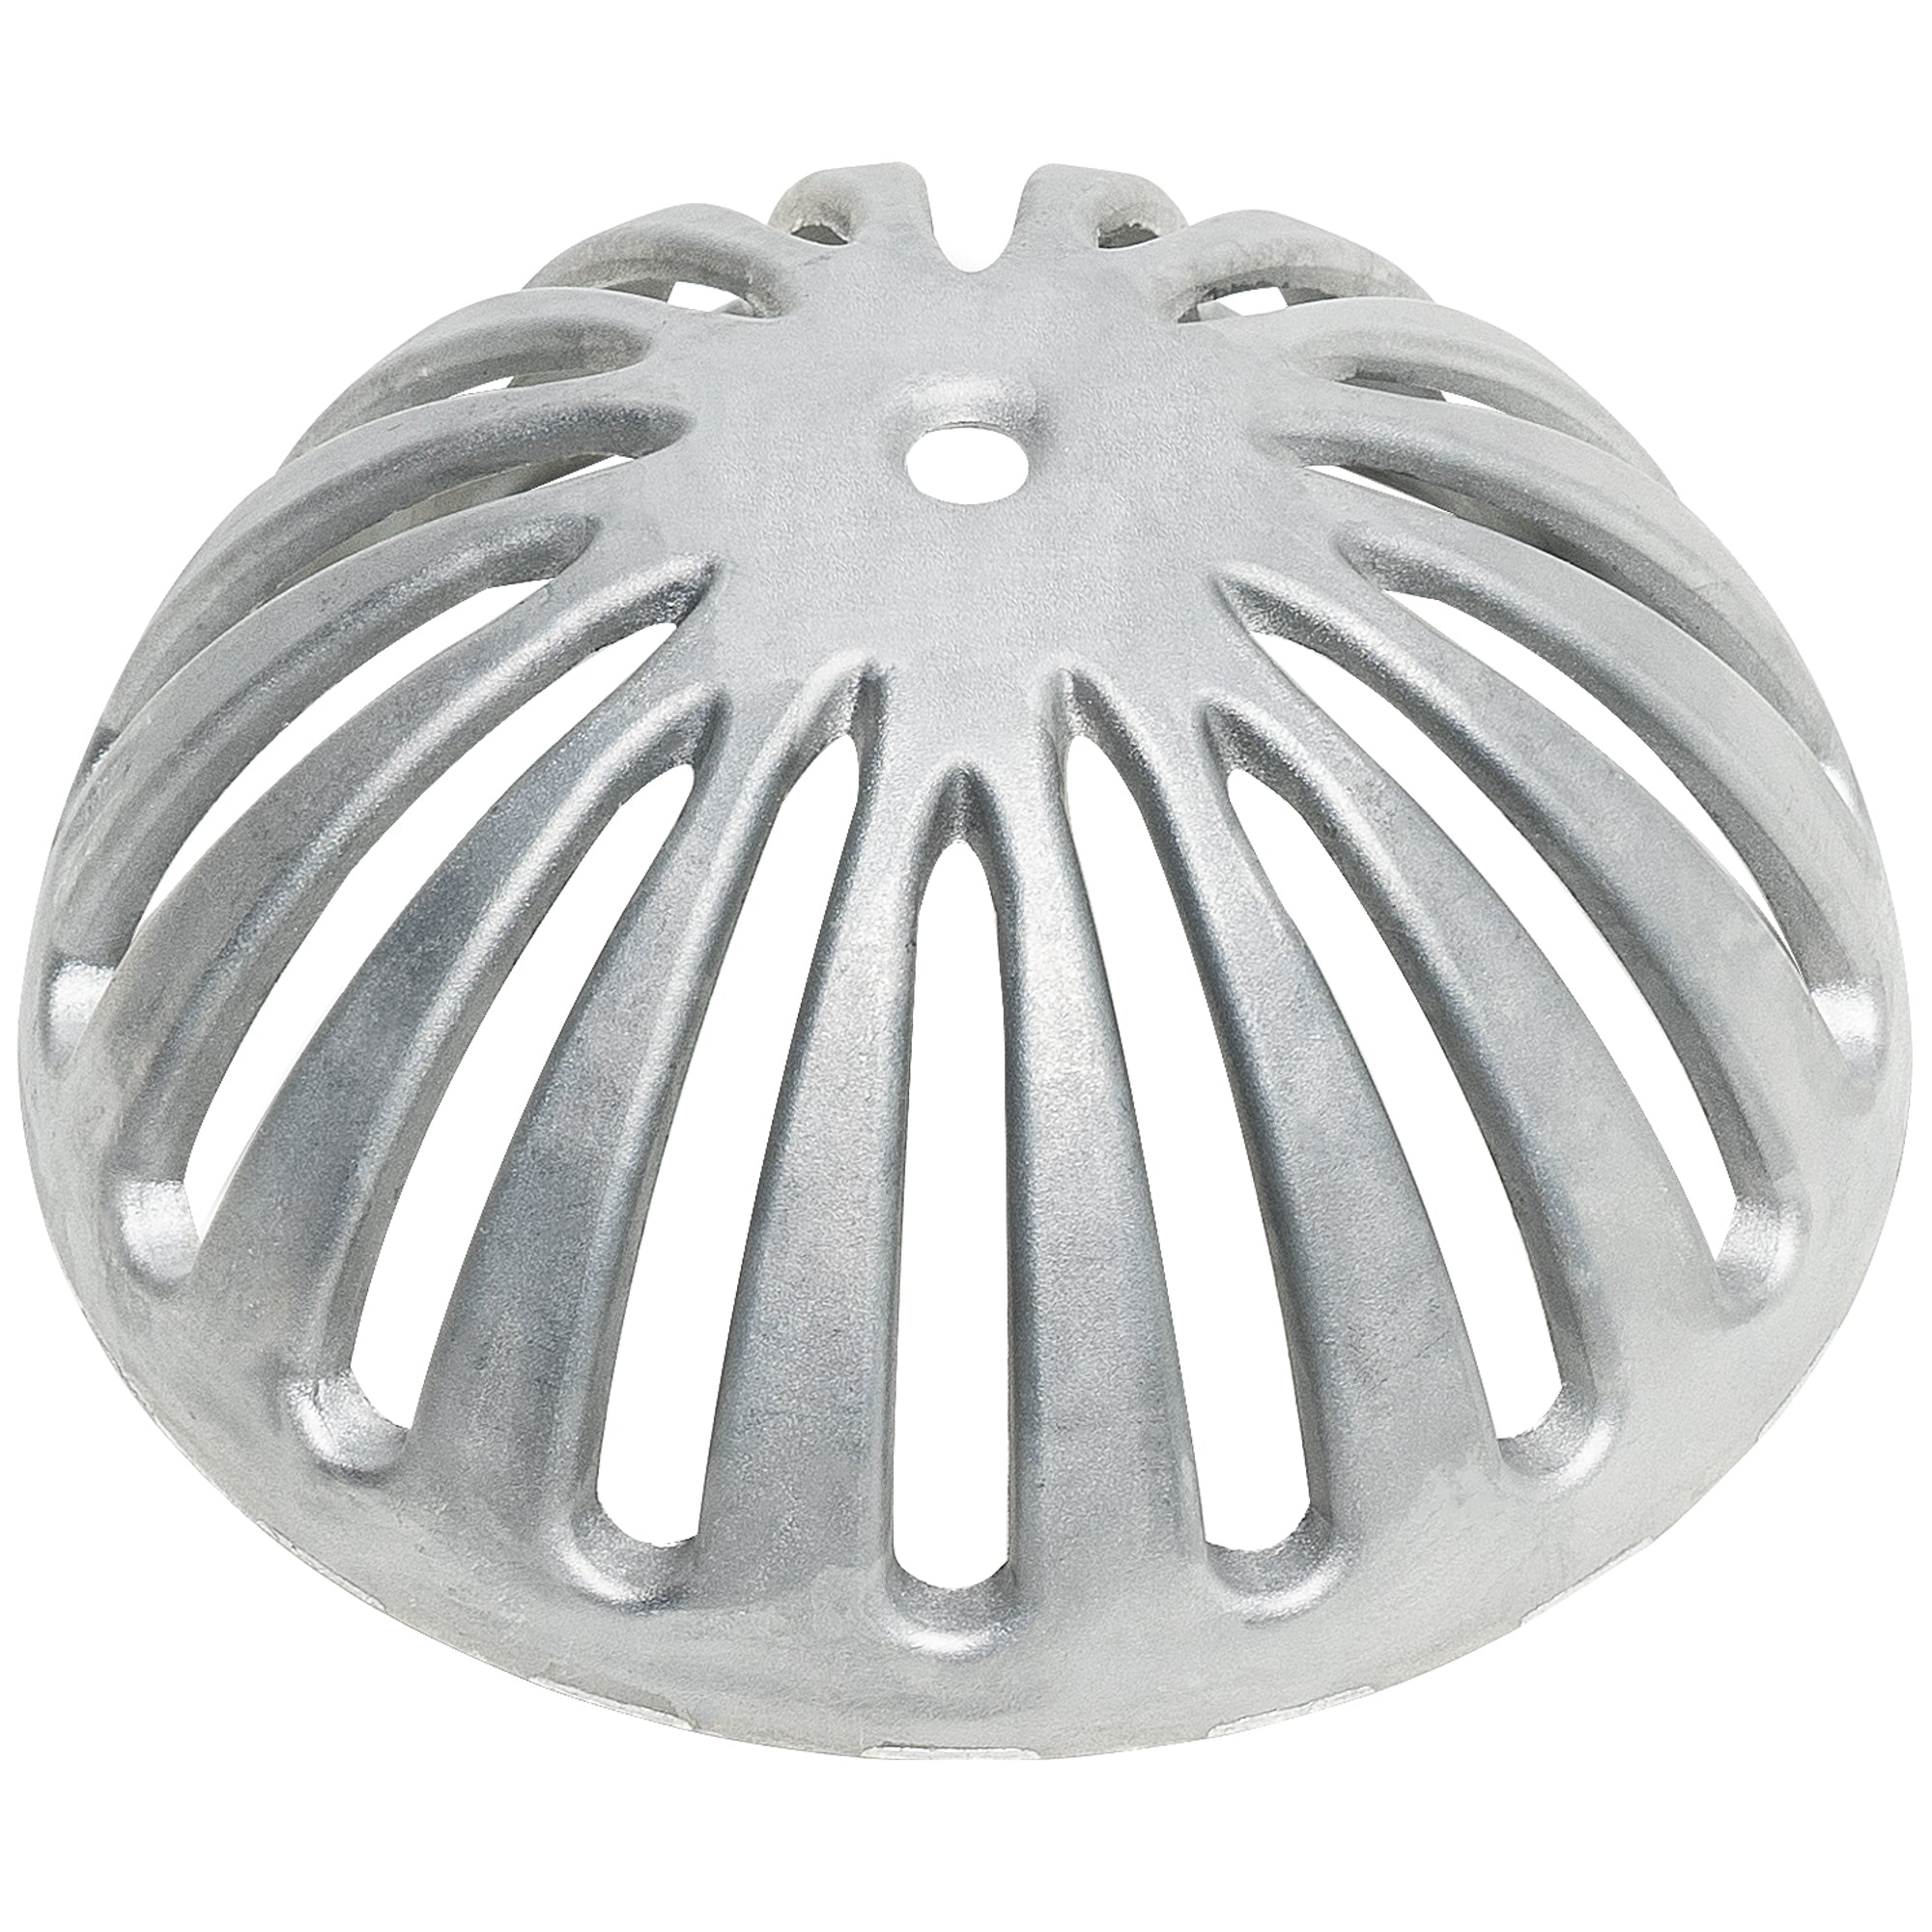 Leyso FS-DS Aluminum Dome Strainer for 12" Floor Sink. 5-1/4" Diameter